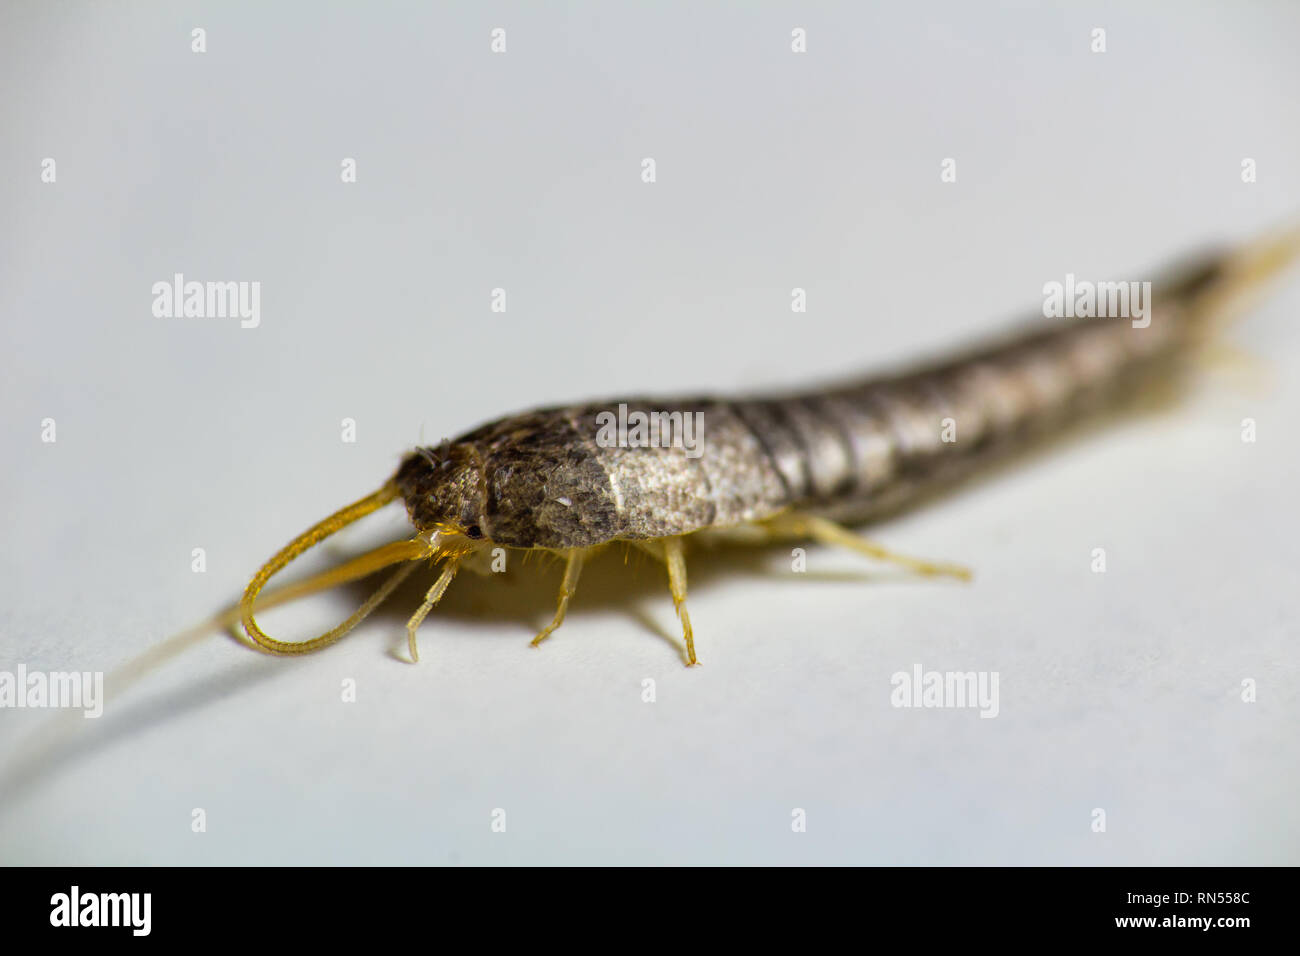 Silverfish, Lepisma saccharina, macro photo on white background Stock Photo